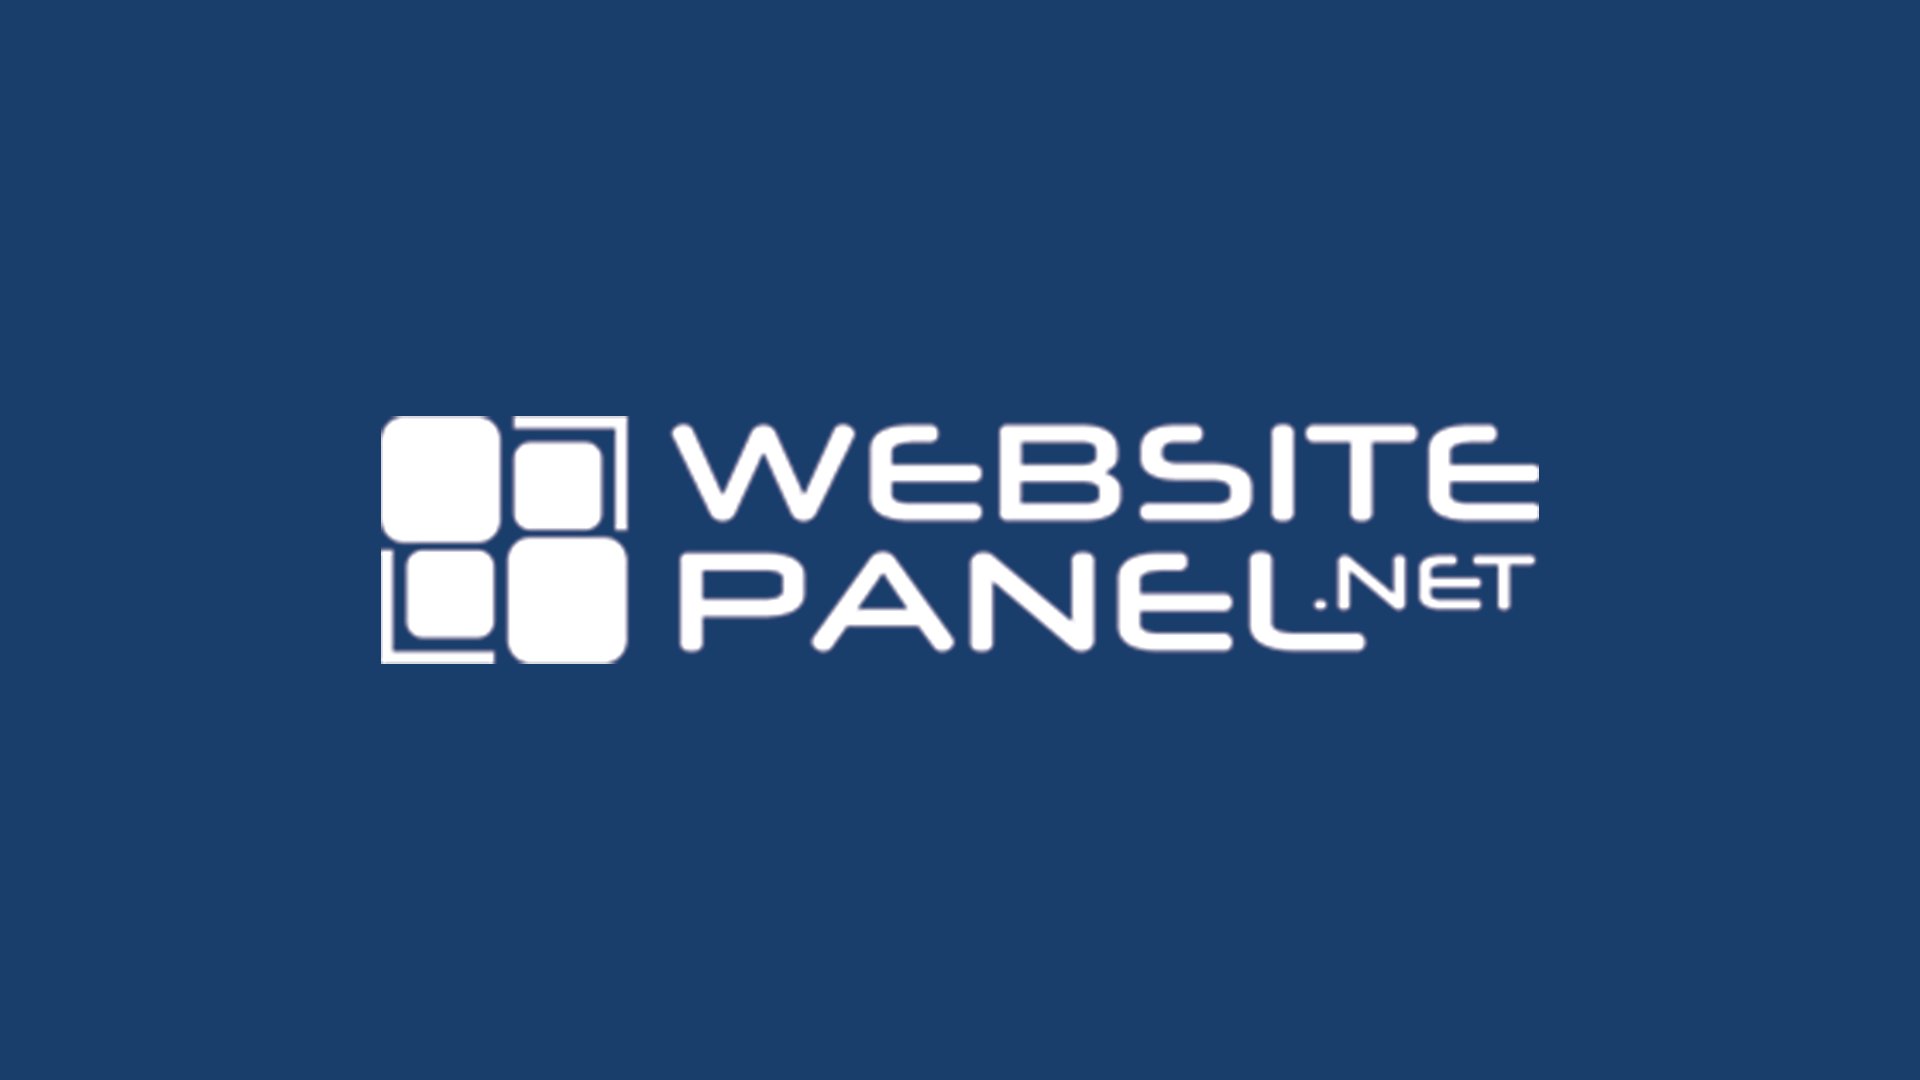 How to install WordPress on WebSitePanel